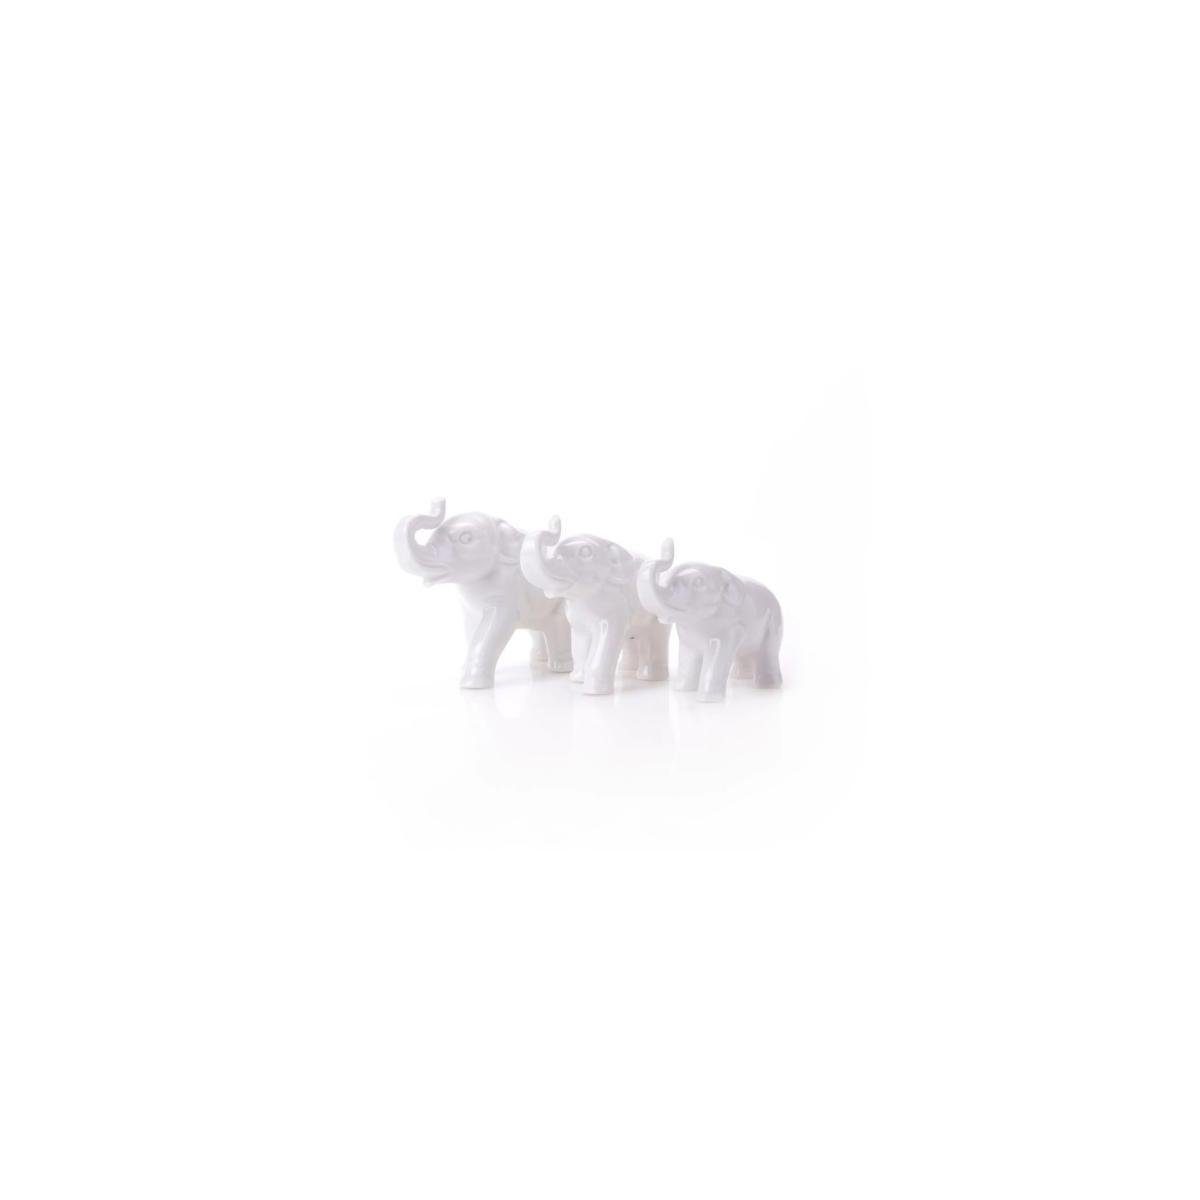 Wagner & Apel Porzellan Dekofigur 824-26 W S - Elefanten-Serie Porzellanfiguren, 3 Stück... | Dekofiguren